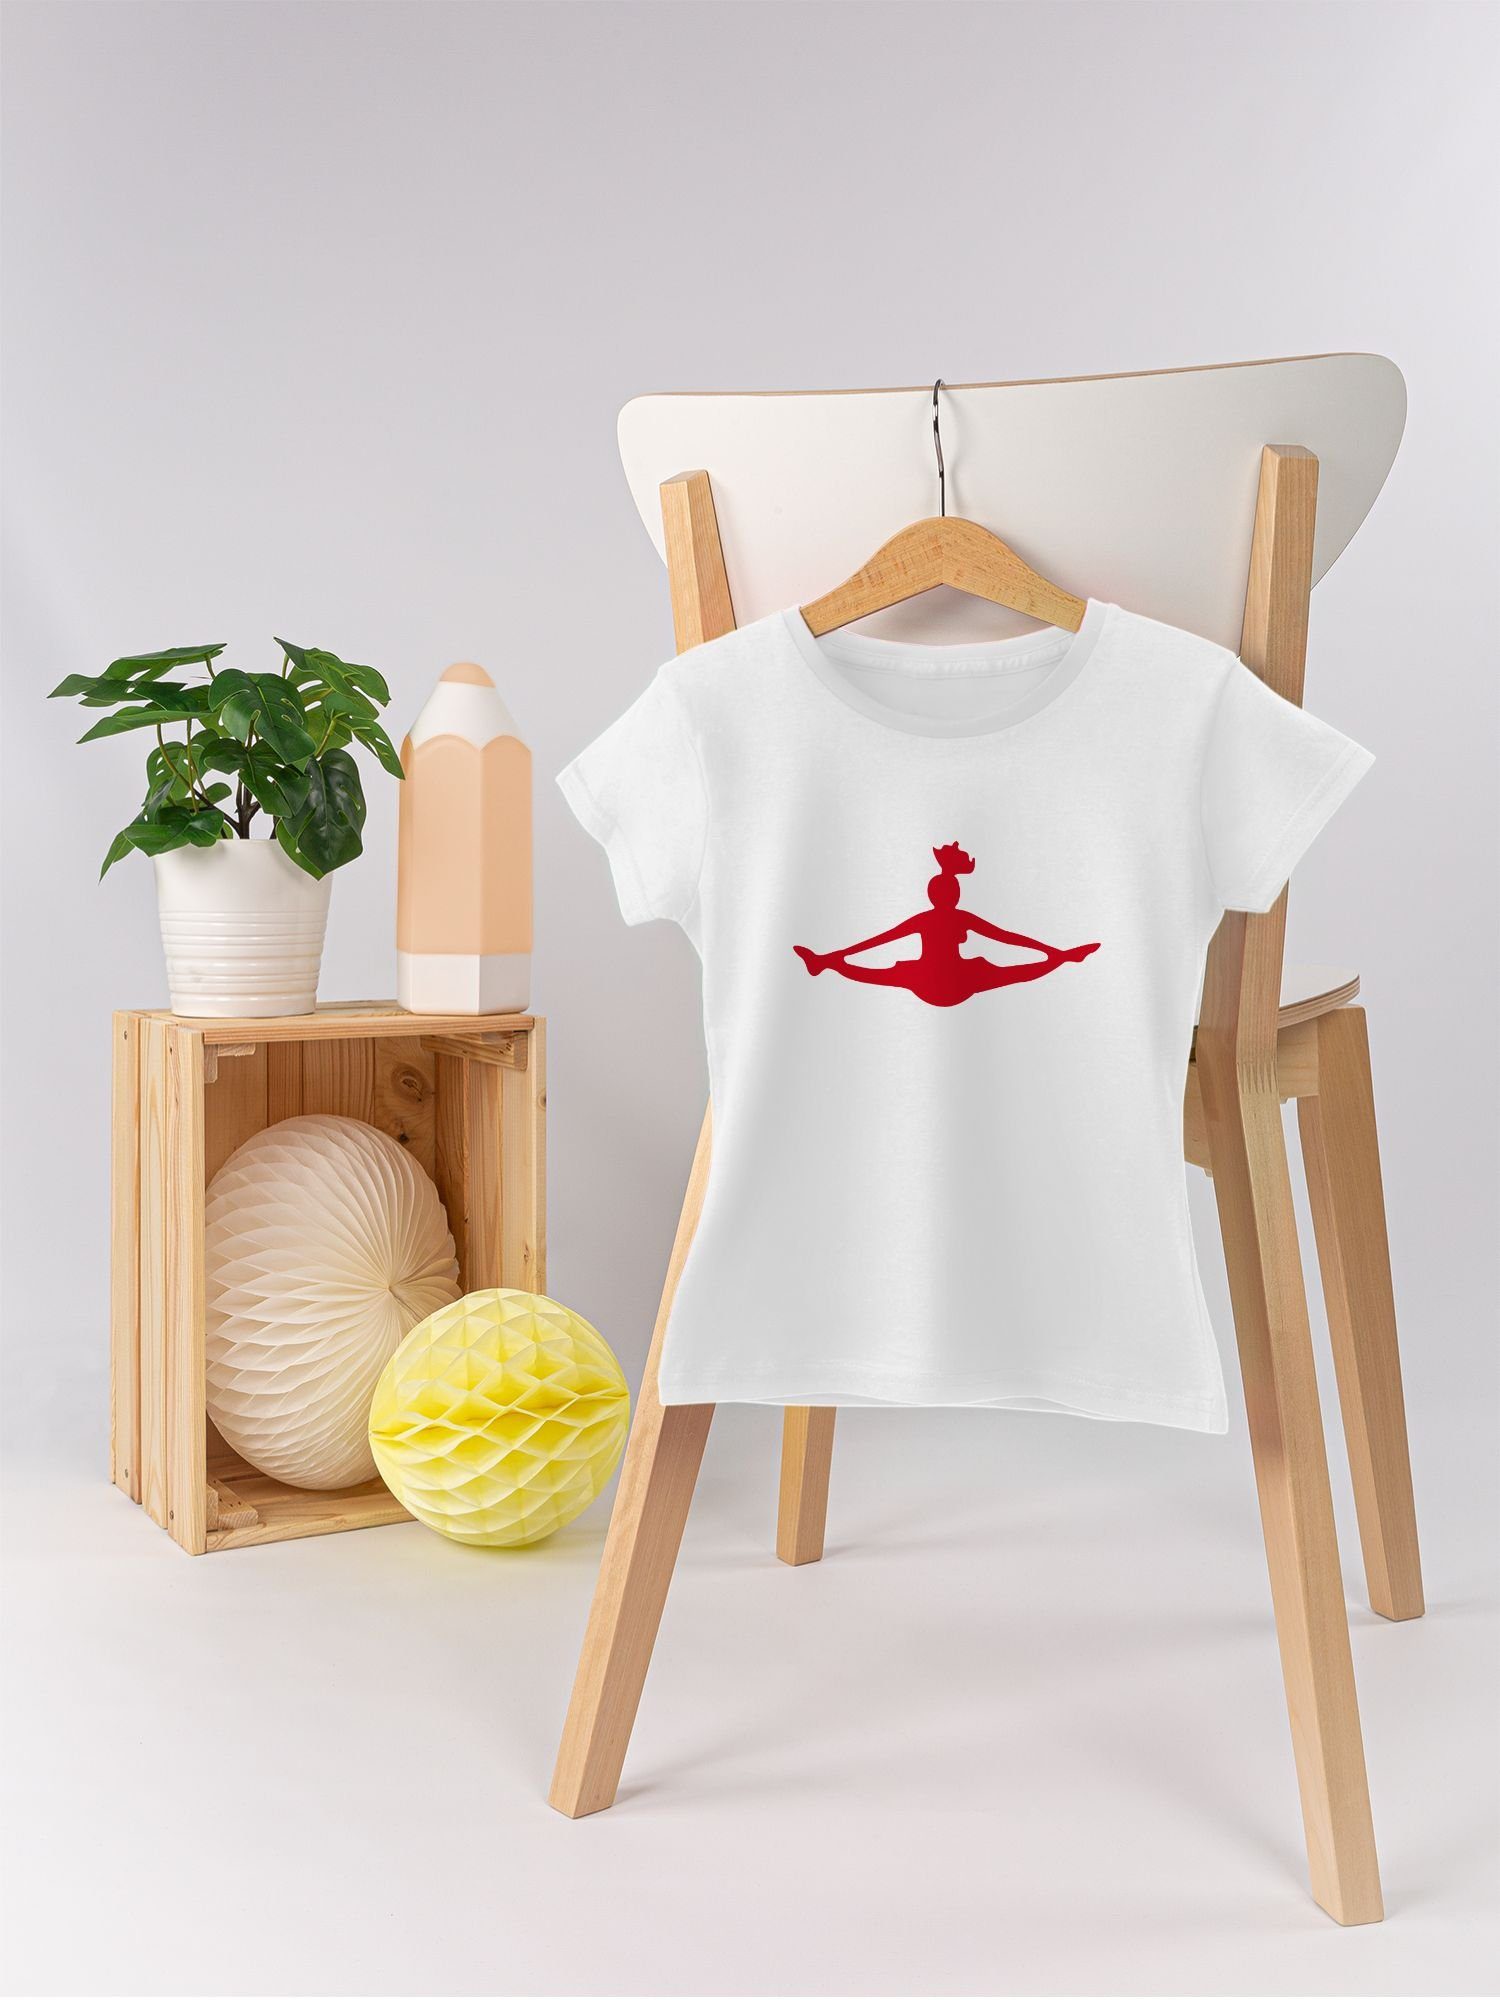 Shirtracer T-Shirt 1 Kleidung Cheerleading Kinder Sport Weiß